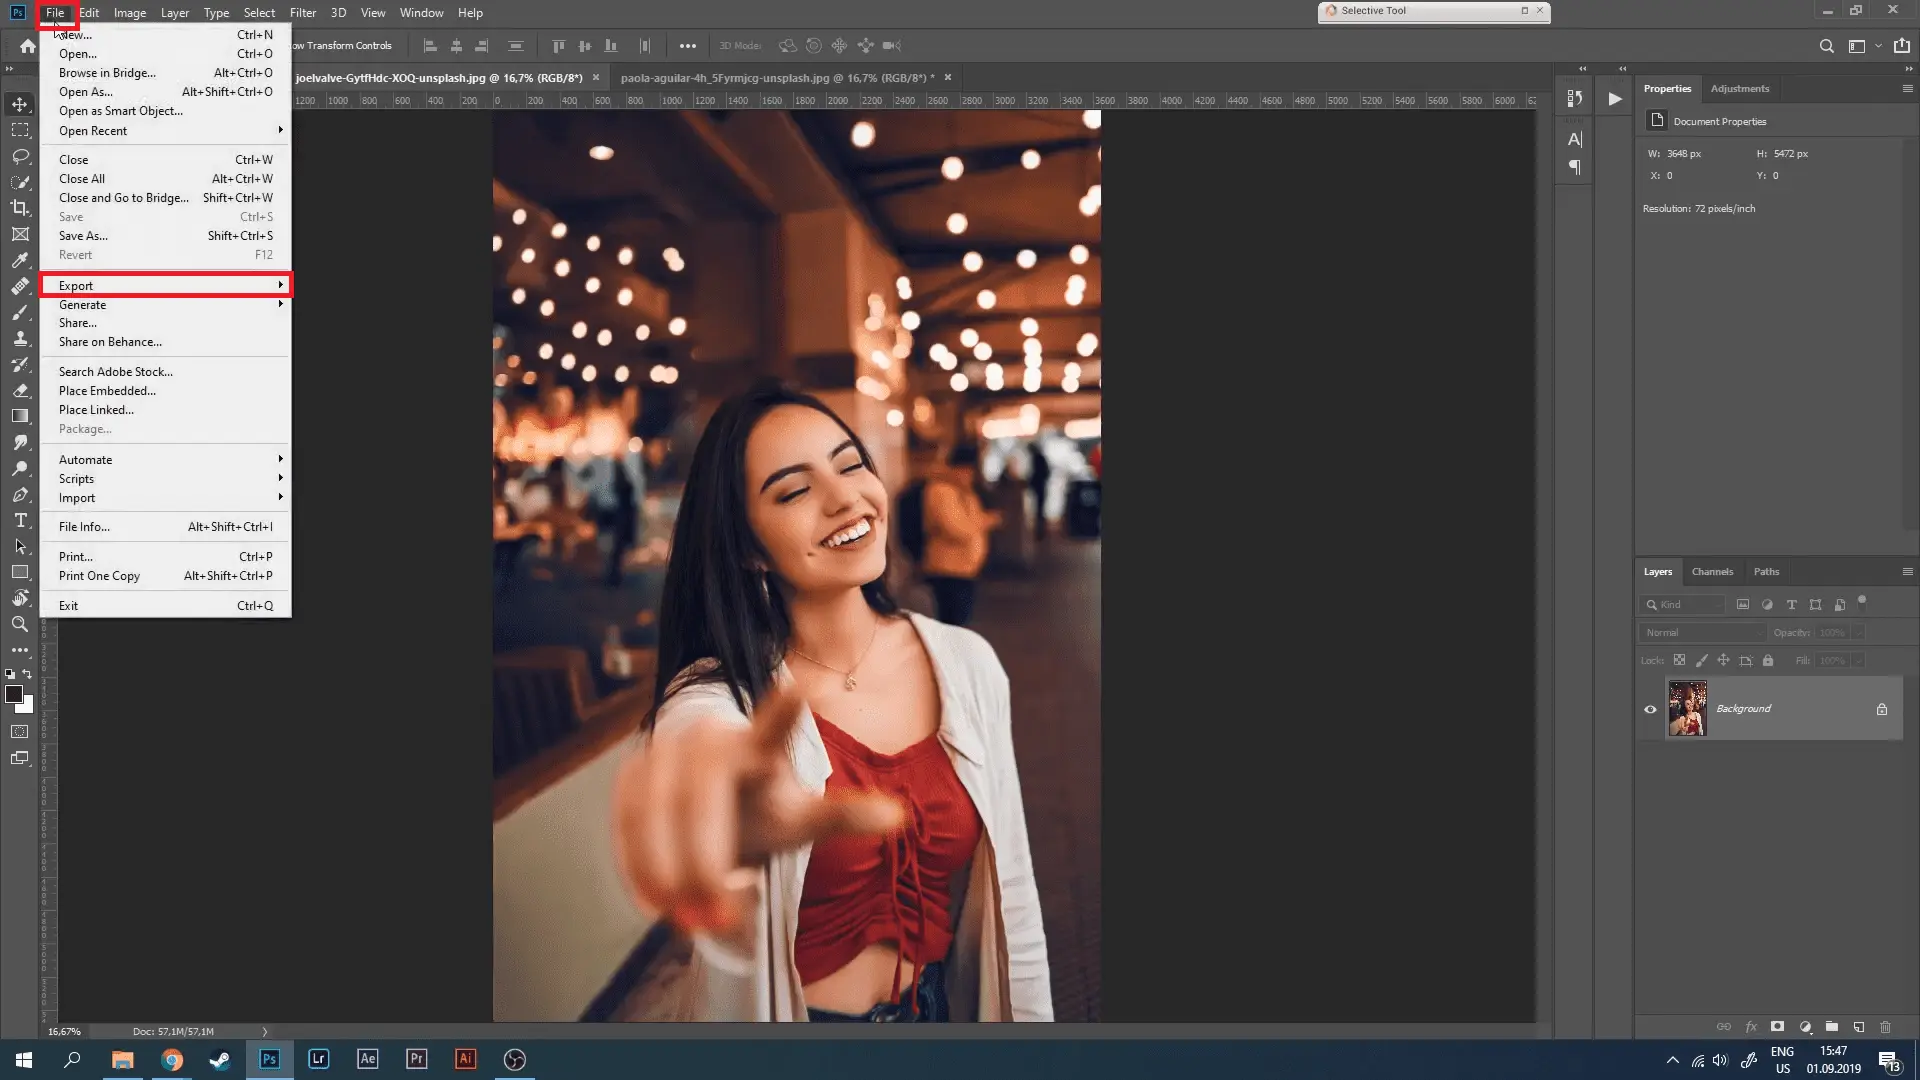 How to add metadata to photos in Adobe Photoshop